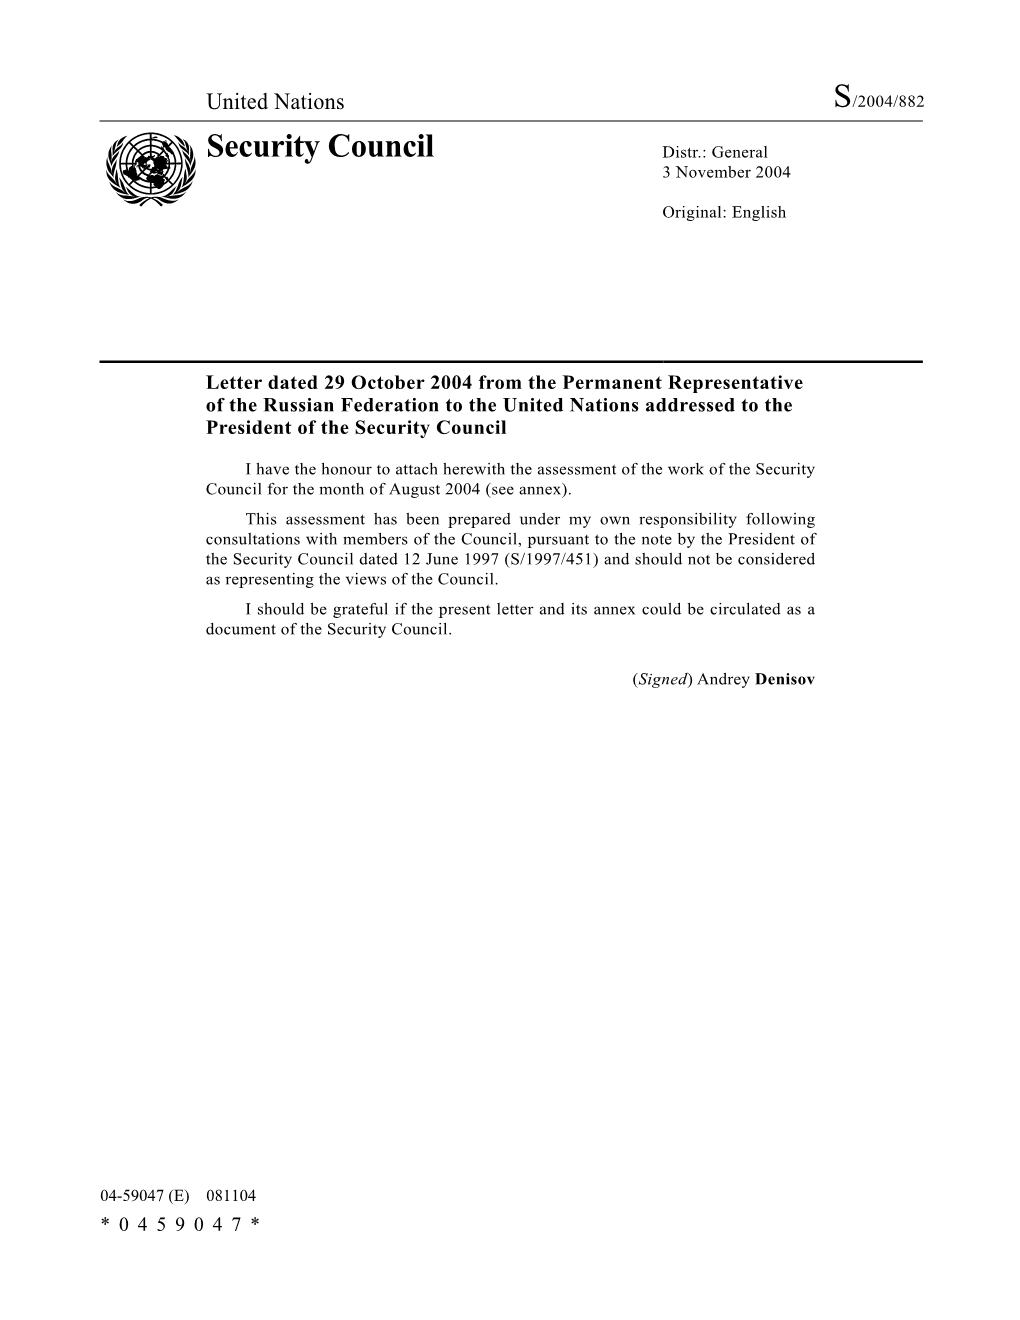 Security Council Distr.: General 3 November 2004